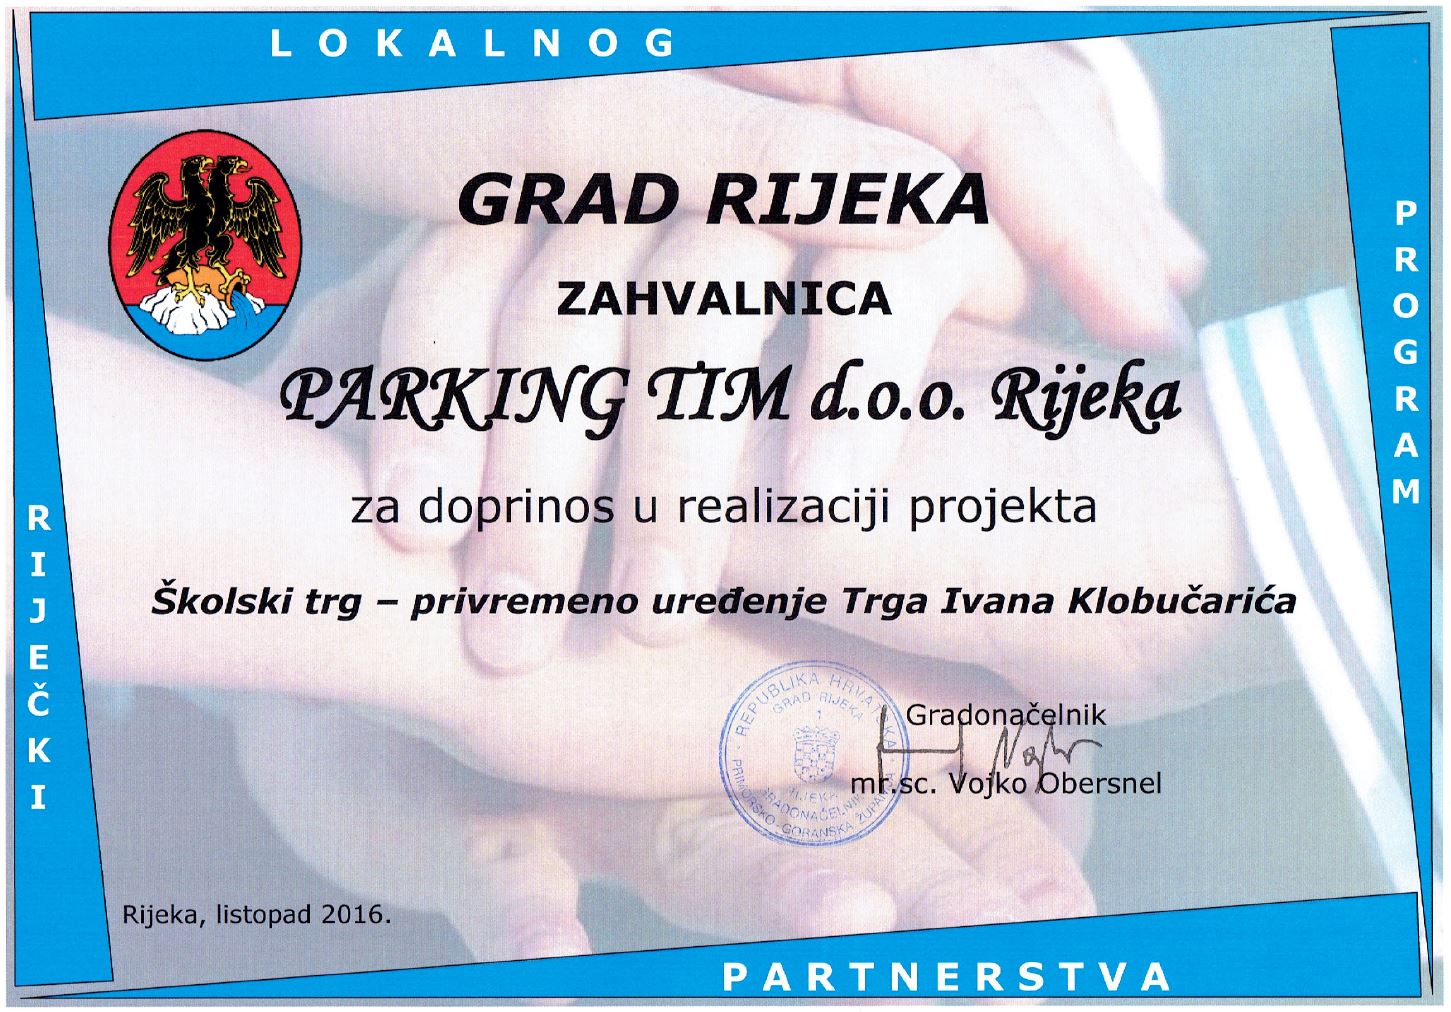 ZAHVALNICA-GRAD RIJEKA PARKING TIM